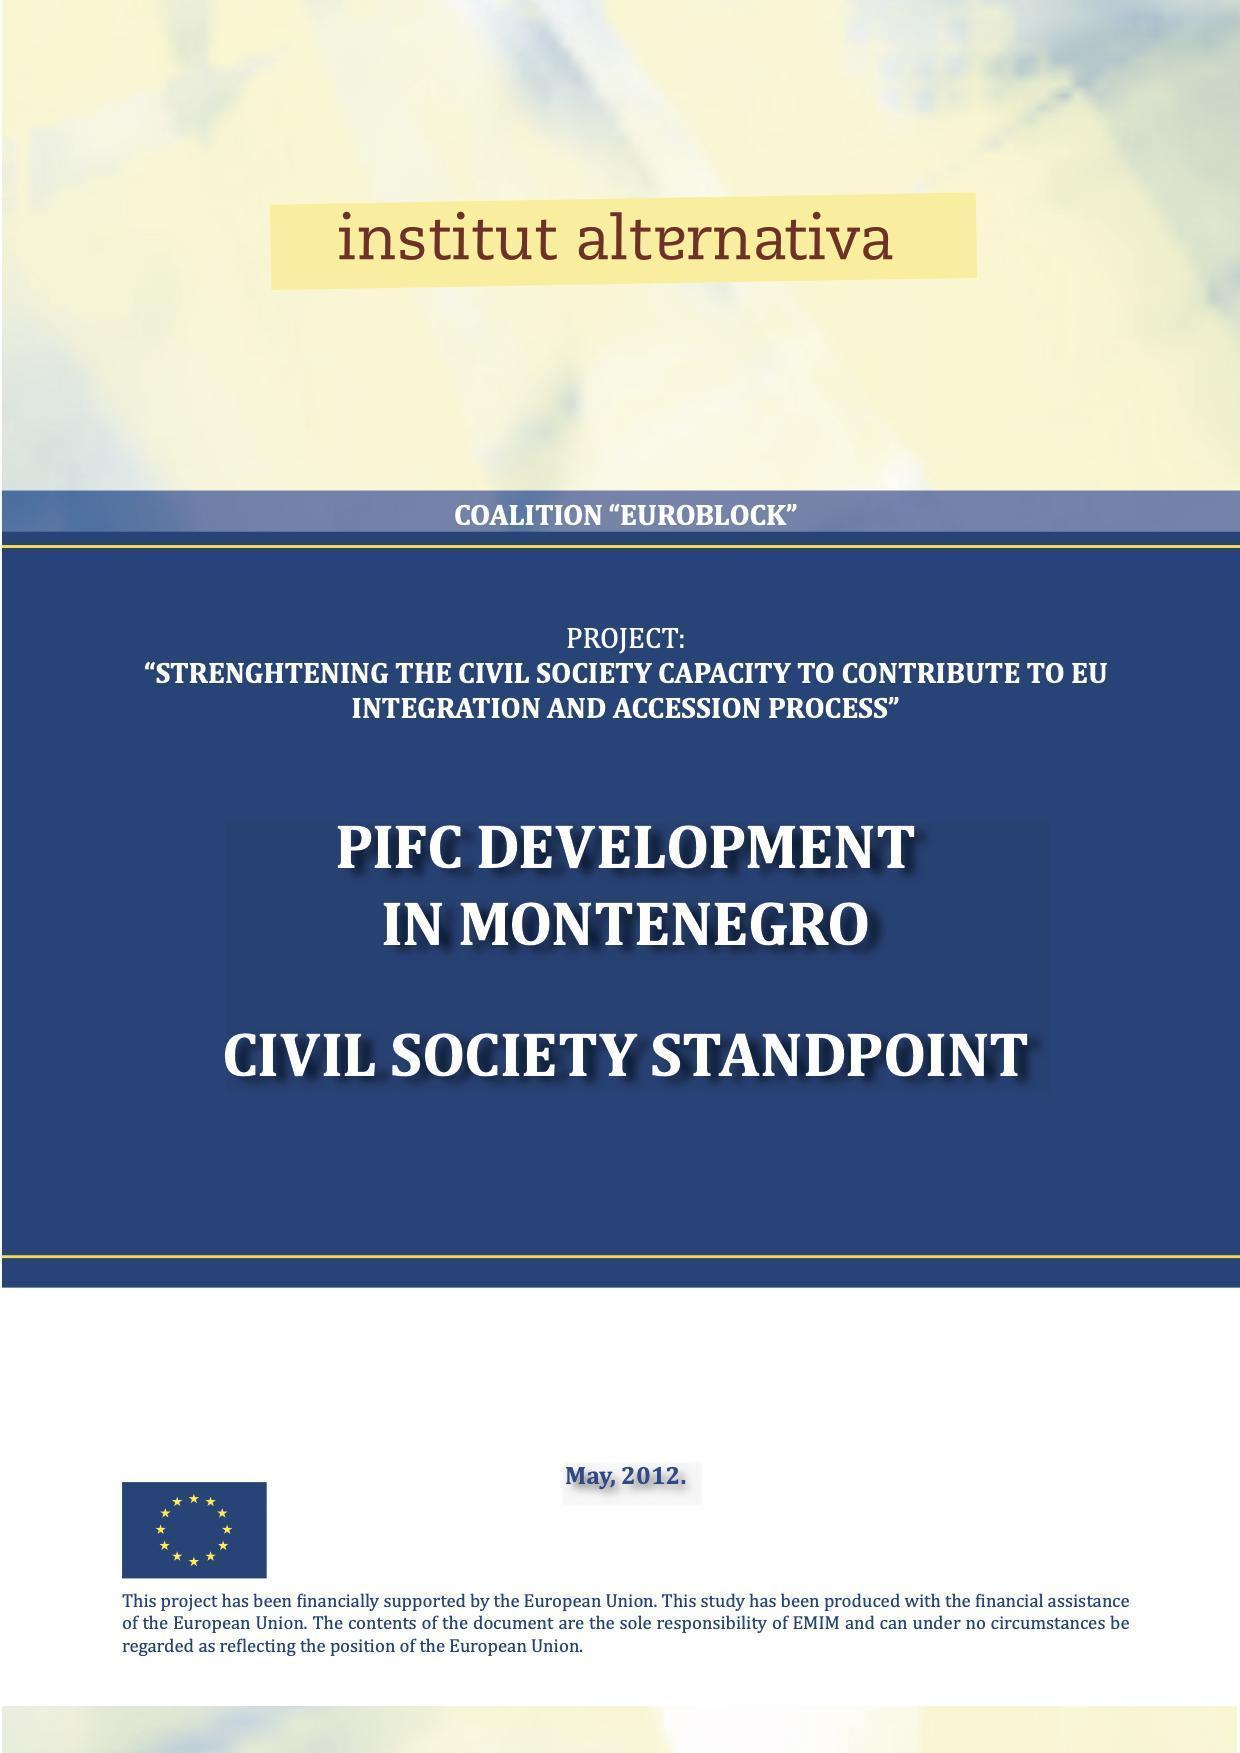 PIFC Development in Montenegro - Civil Society Standpoint